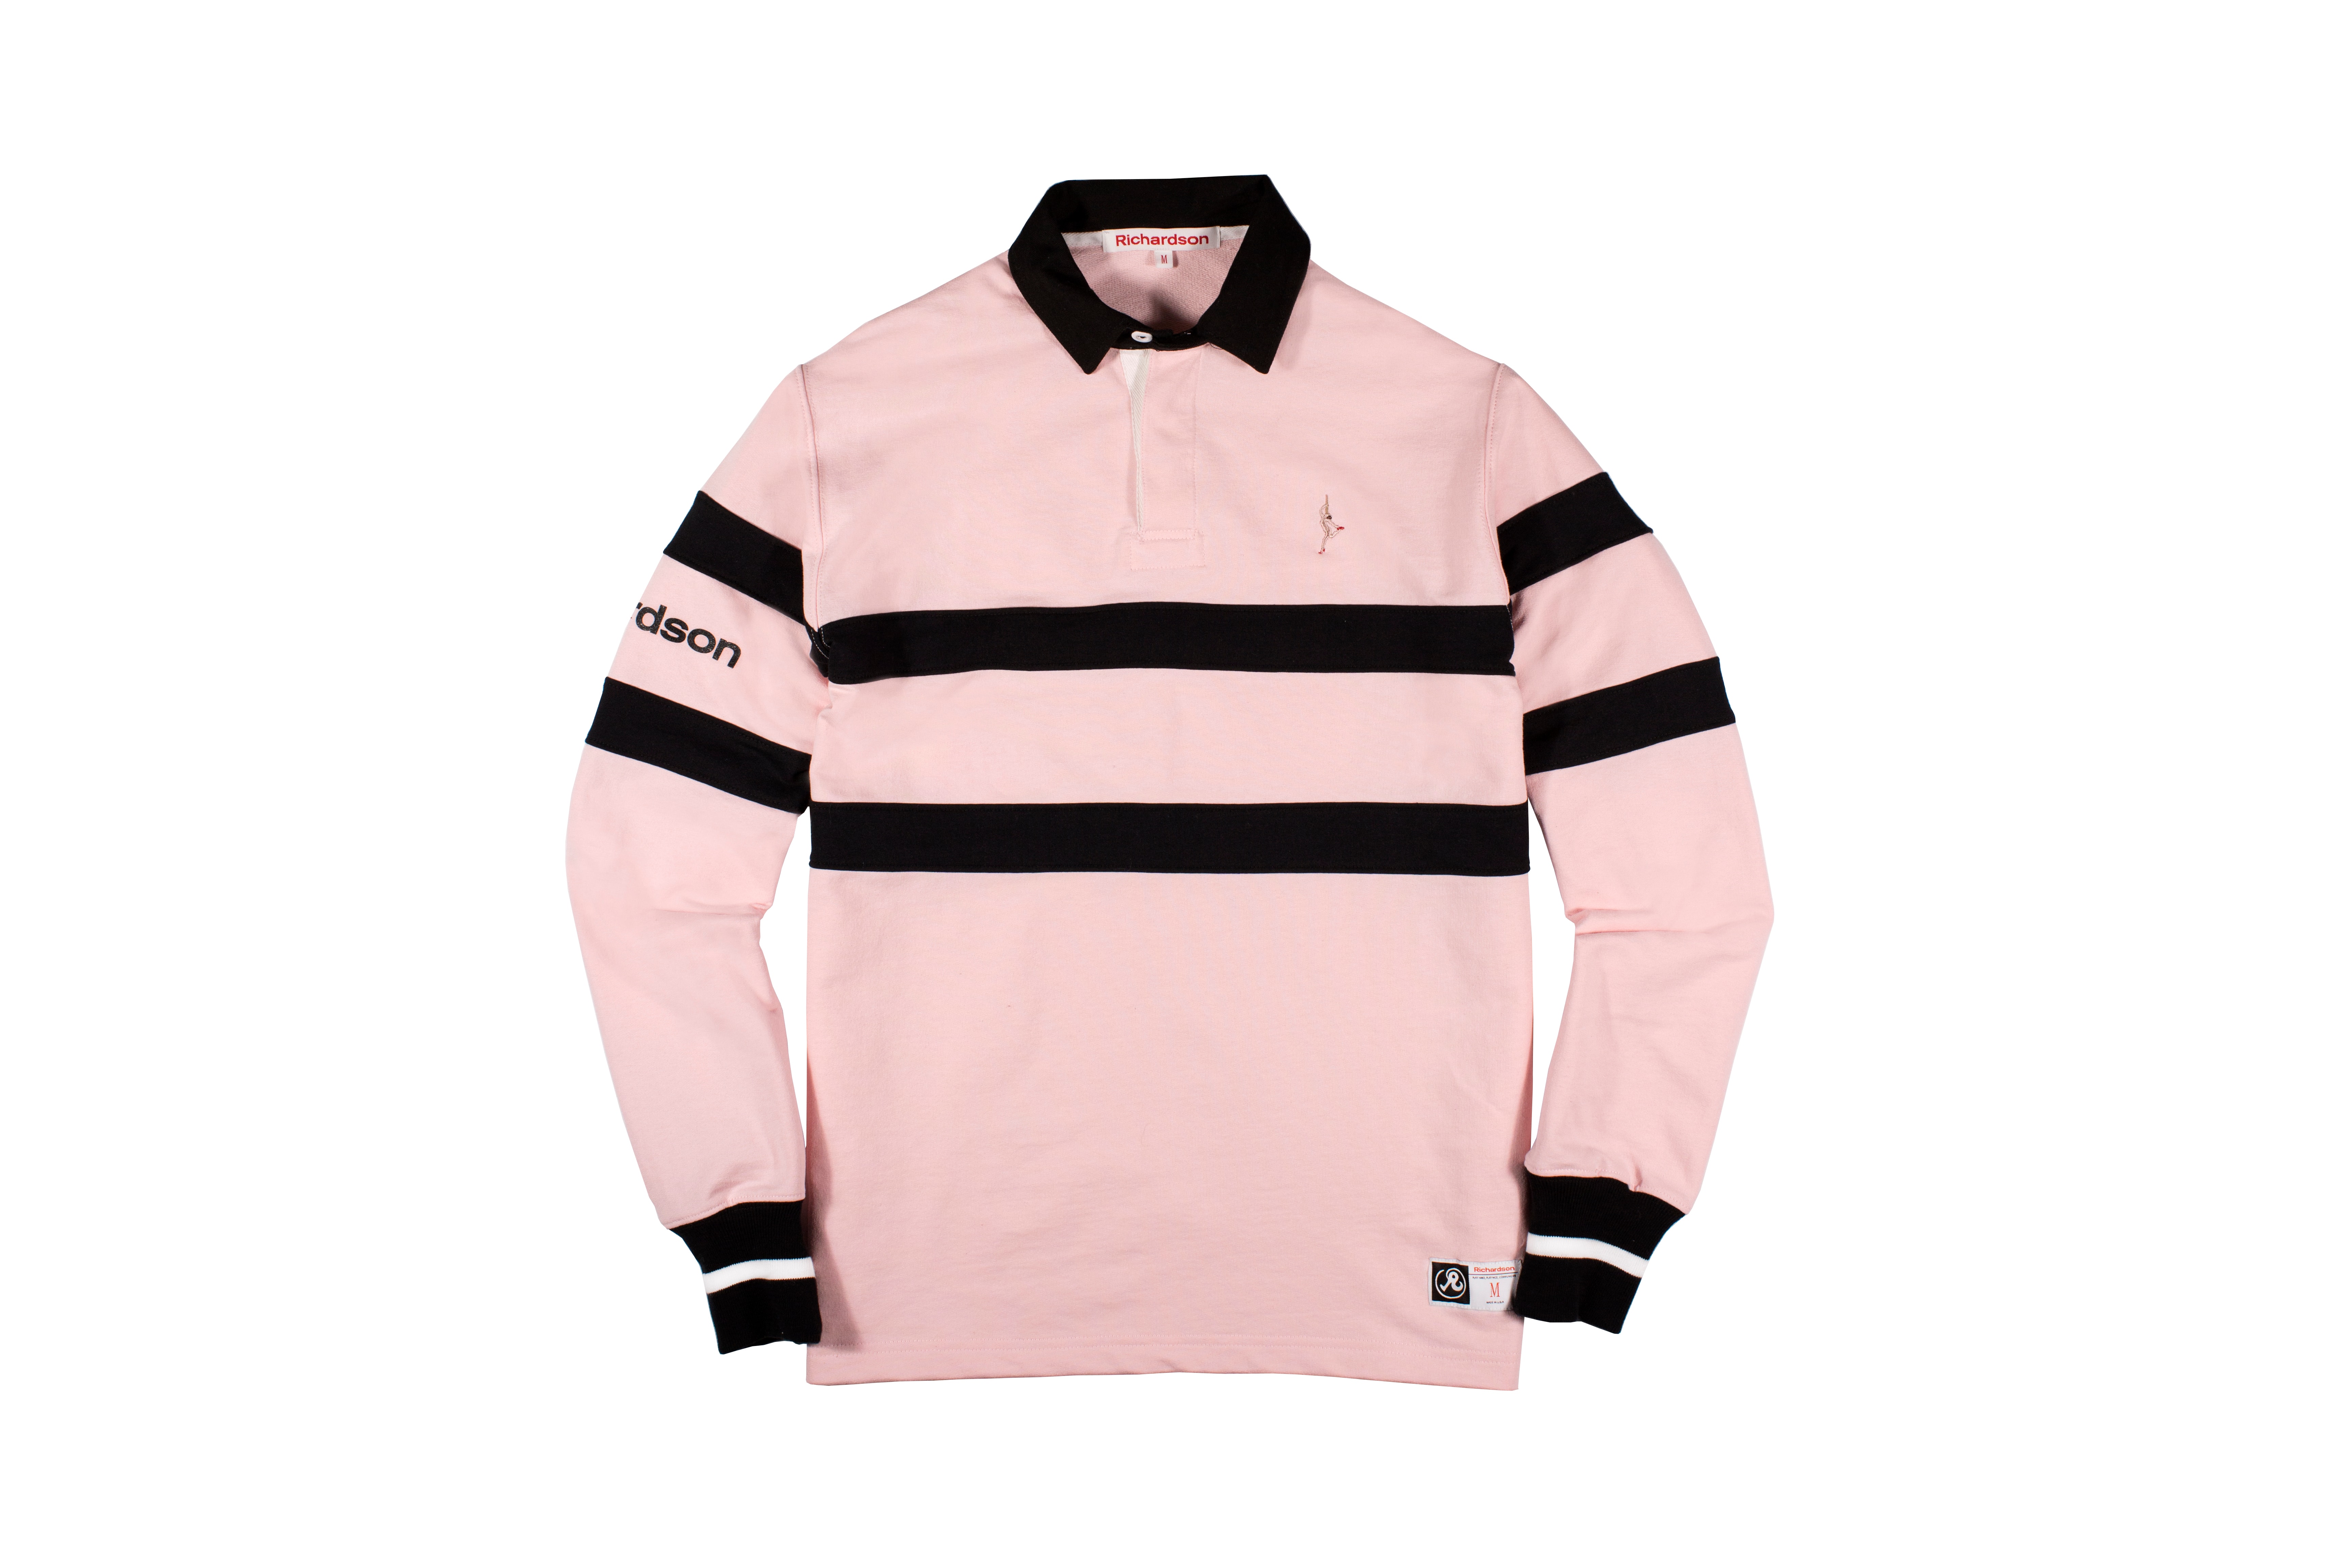 Richardson Spring/Summer 2018 Delivery Hoodies Sweatshirts T-Shirt Staples Streetwear Pink White Black Beige